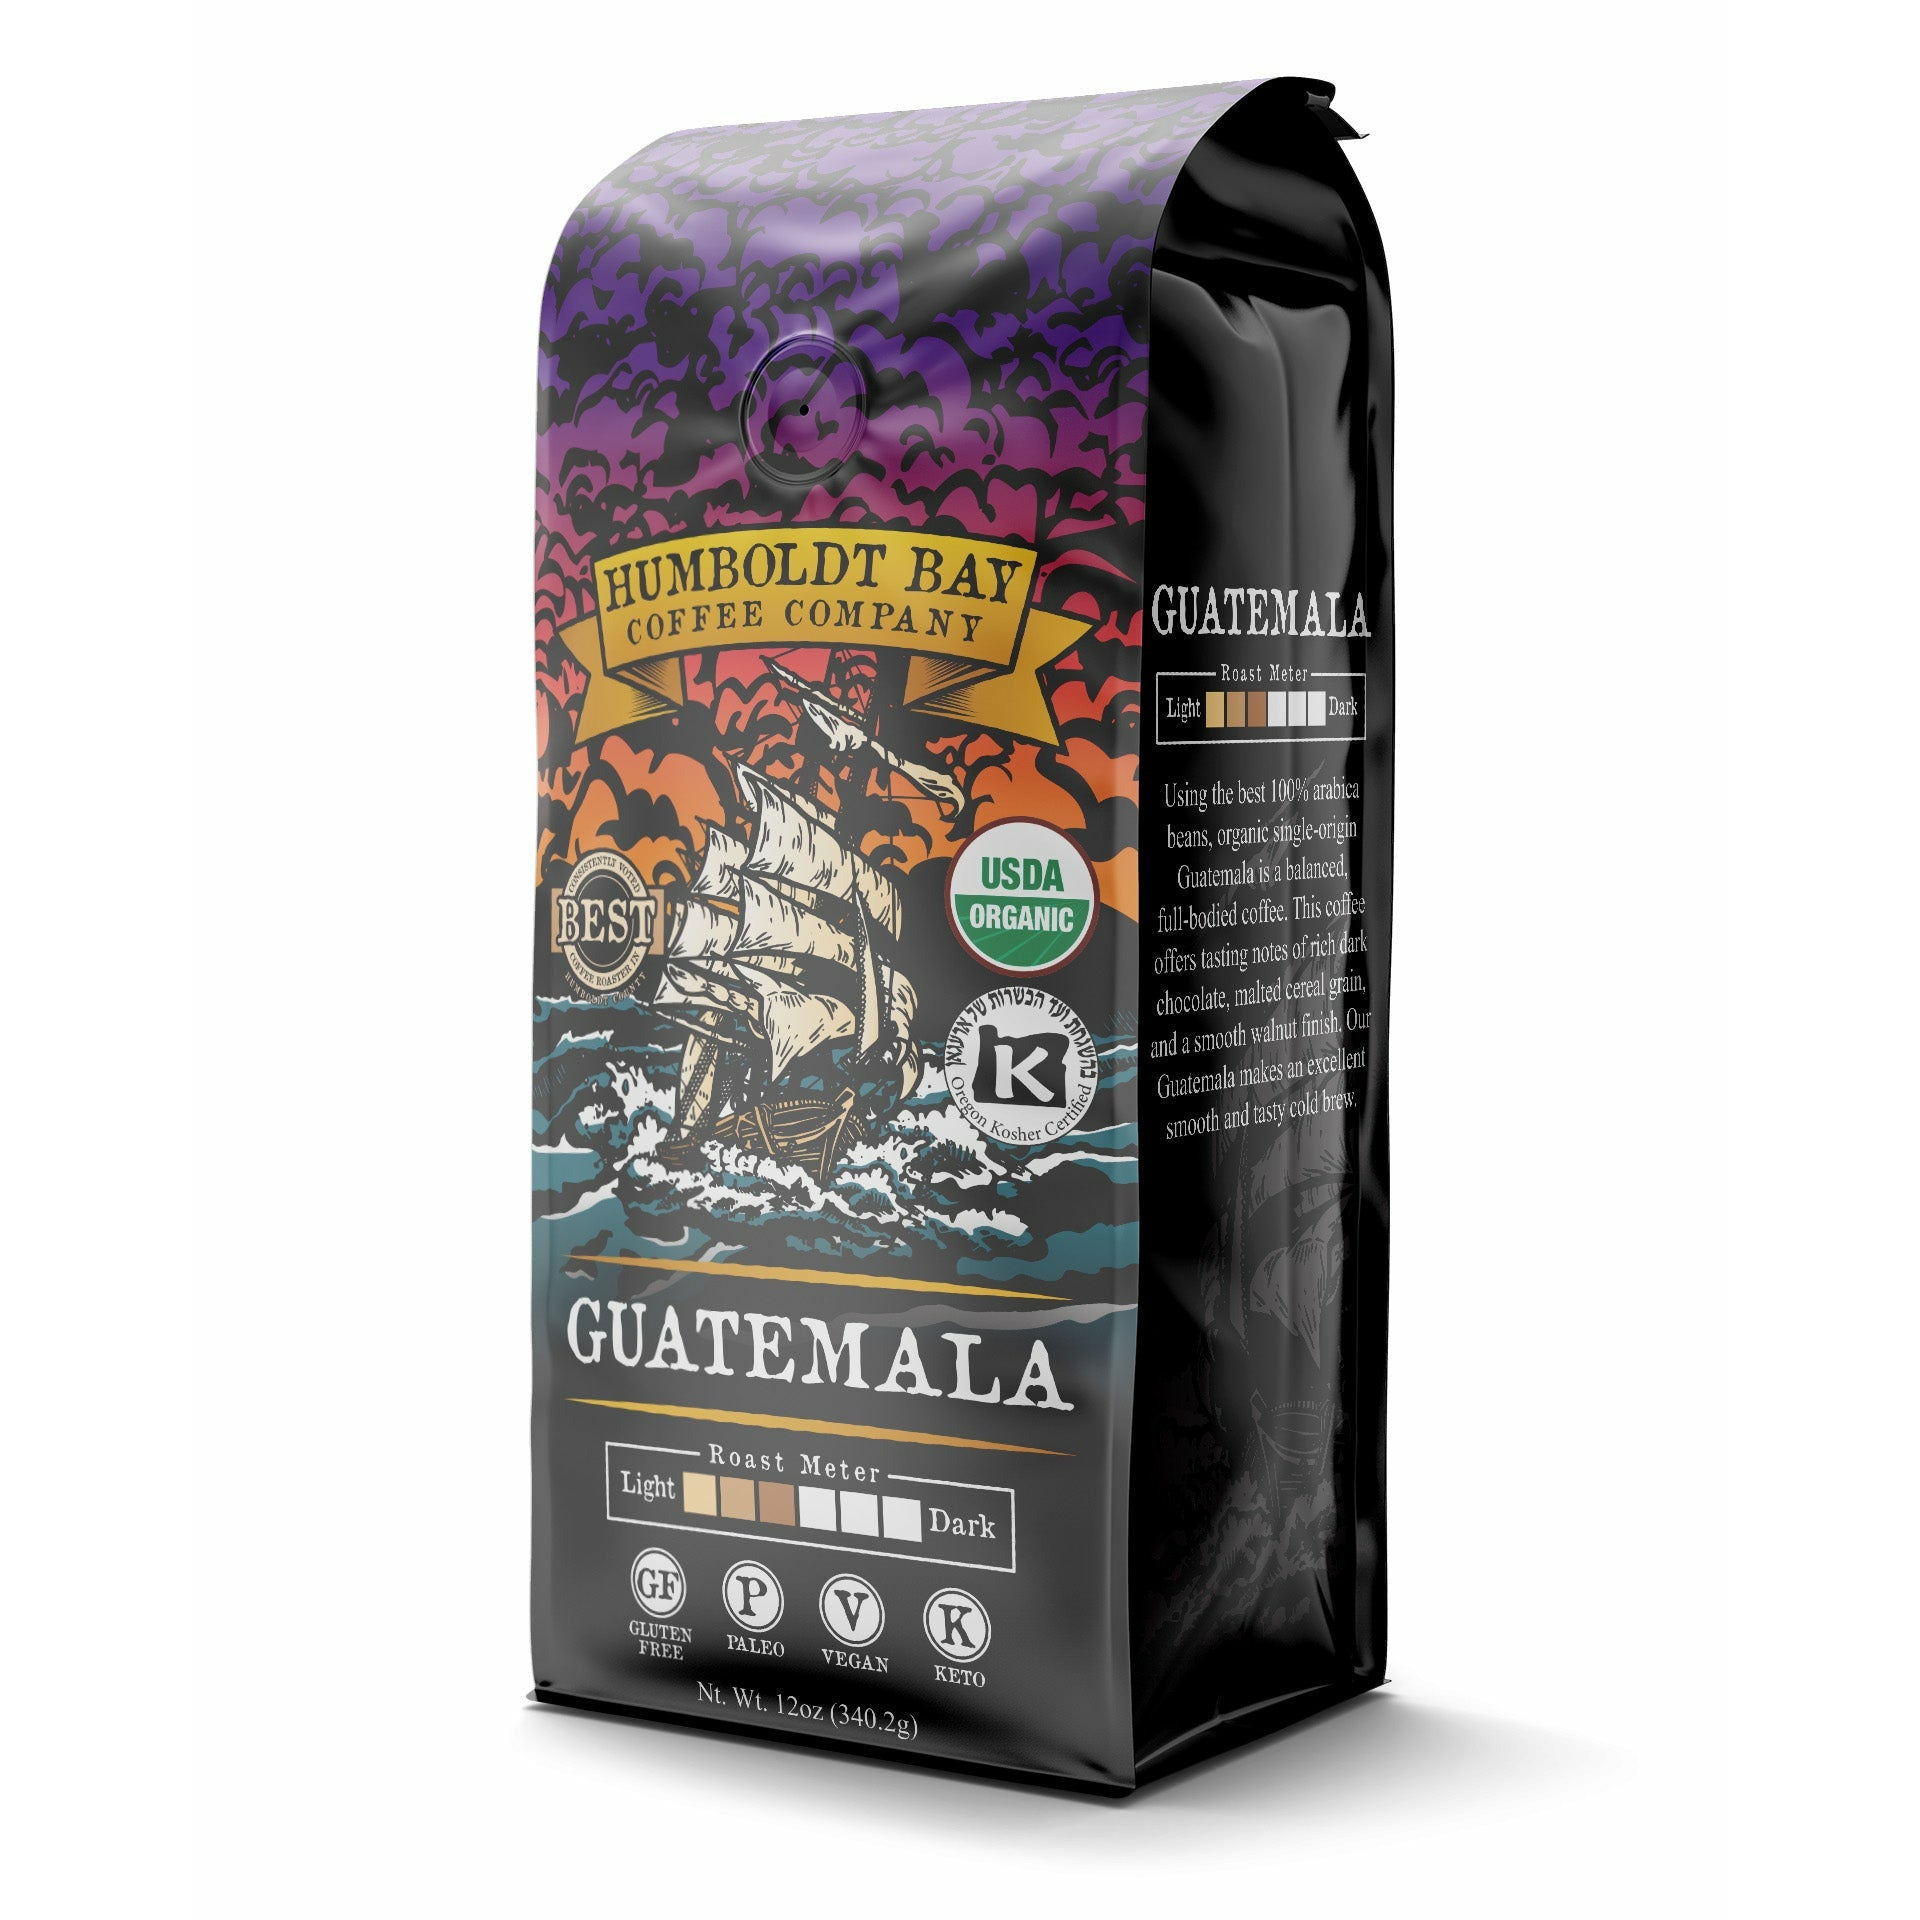 Organic Guatemalan - Humboldt Bay Coffee Co.